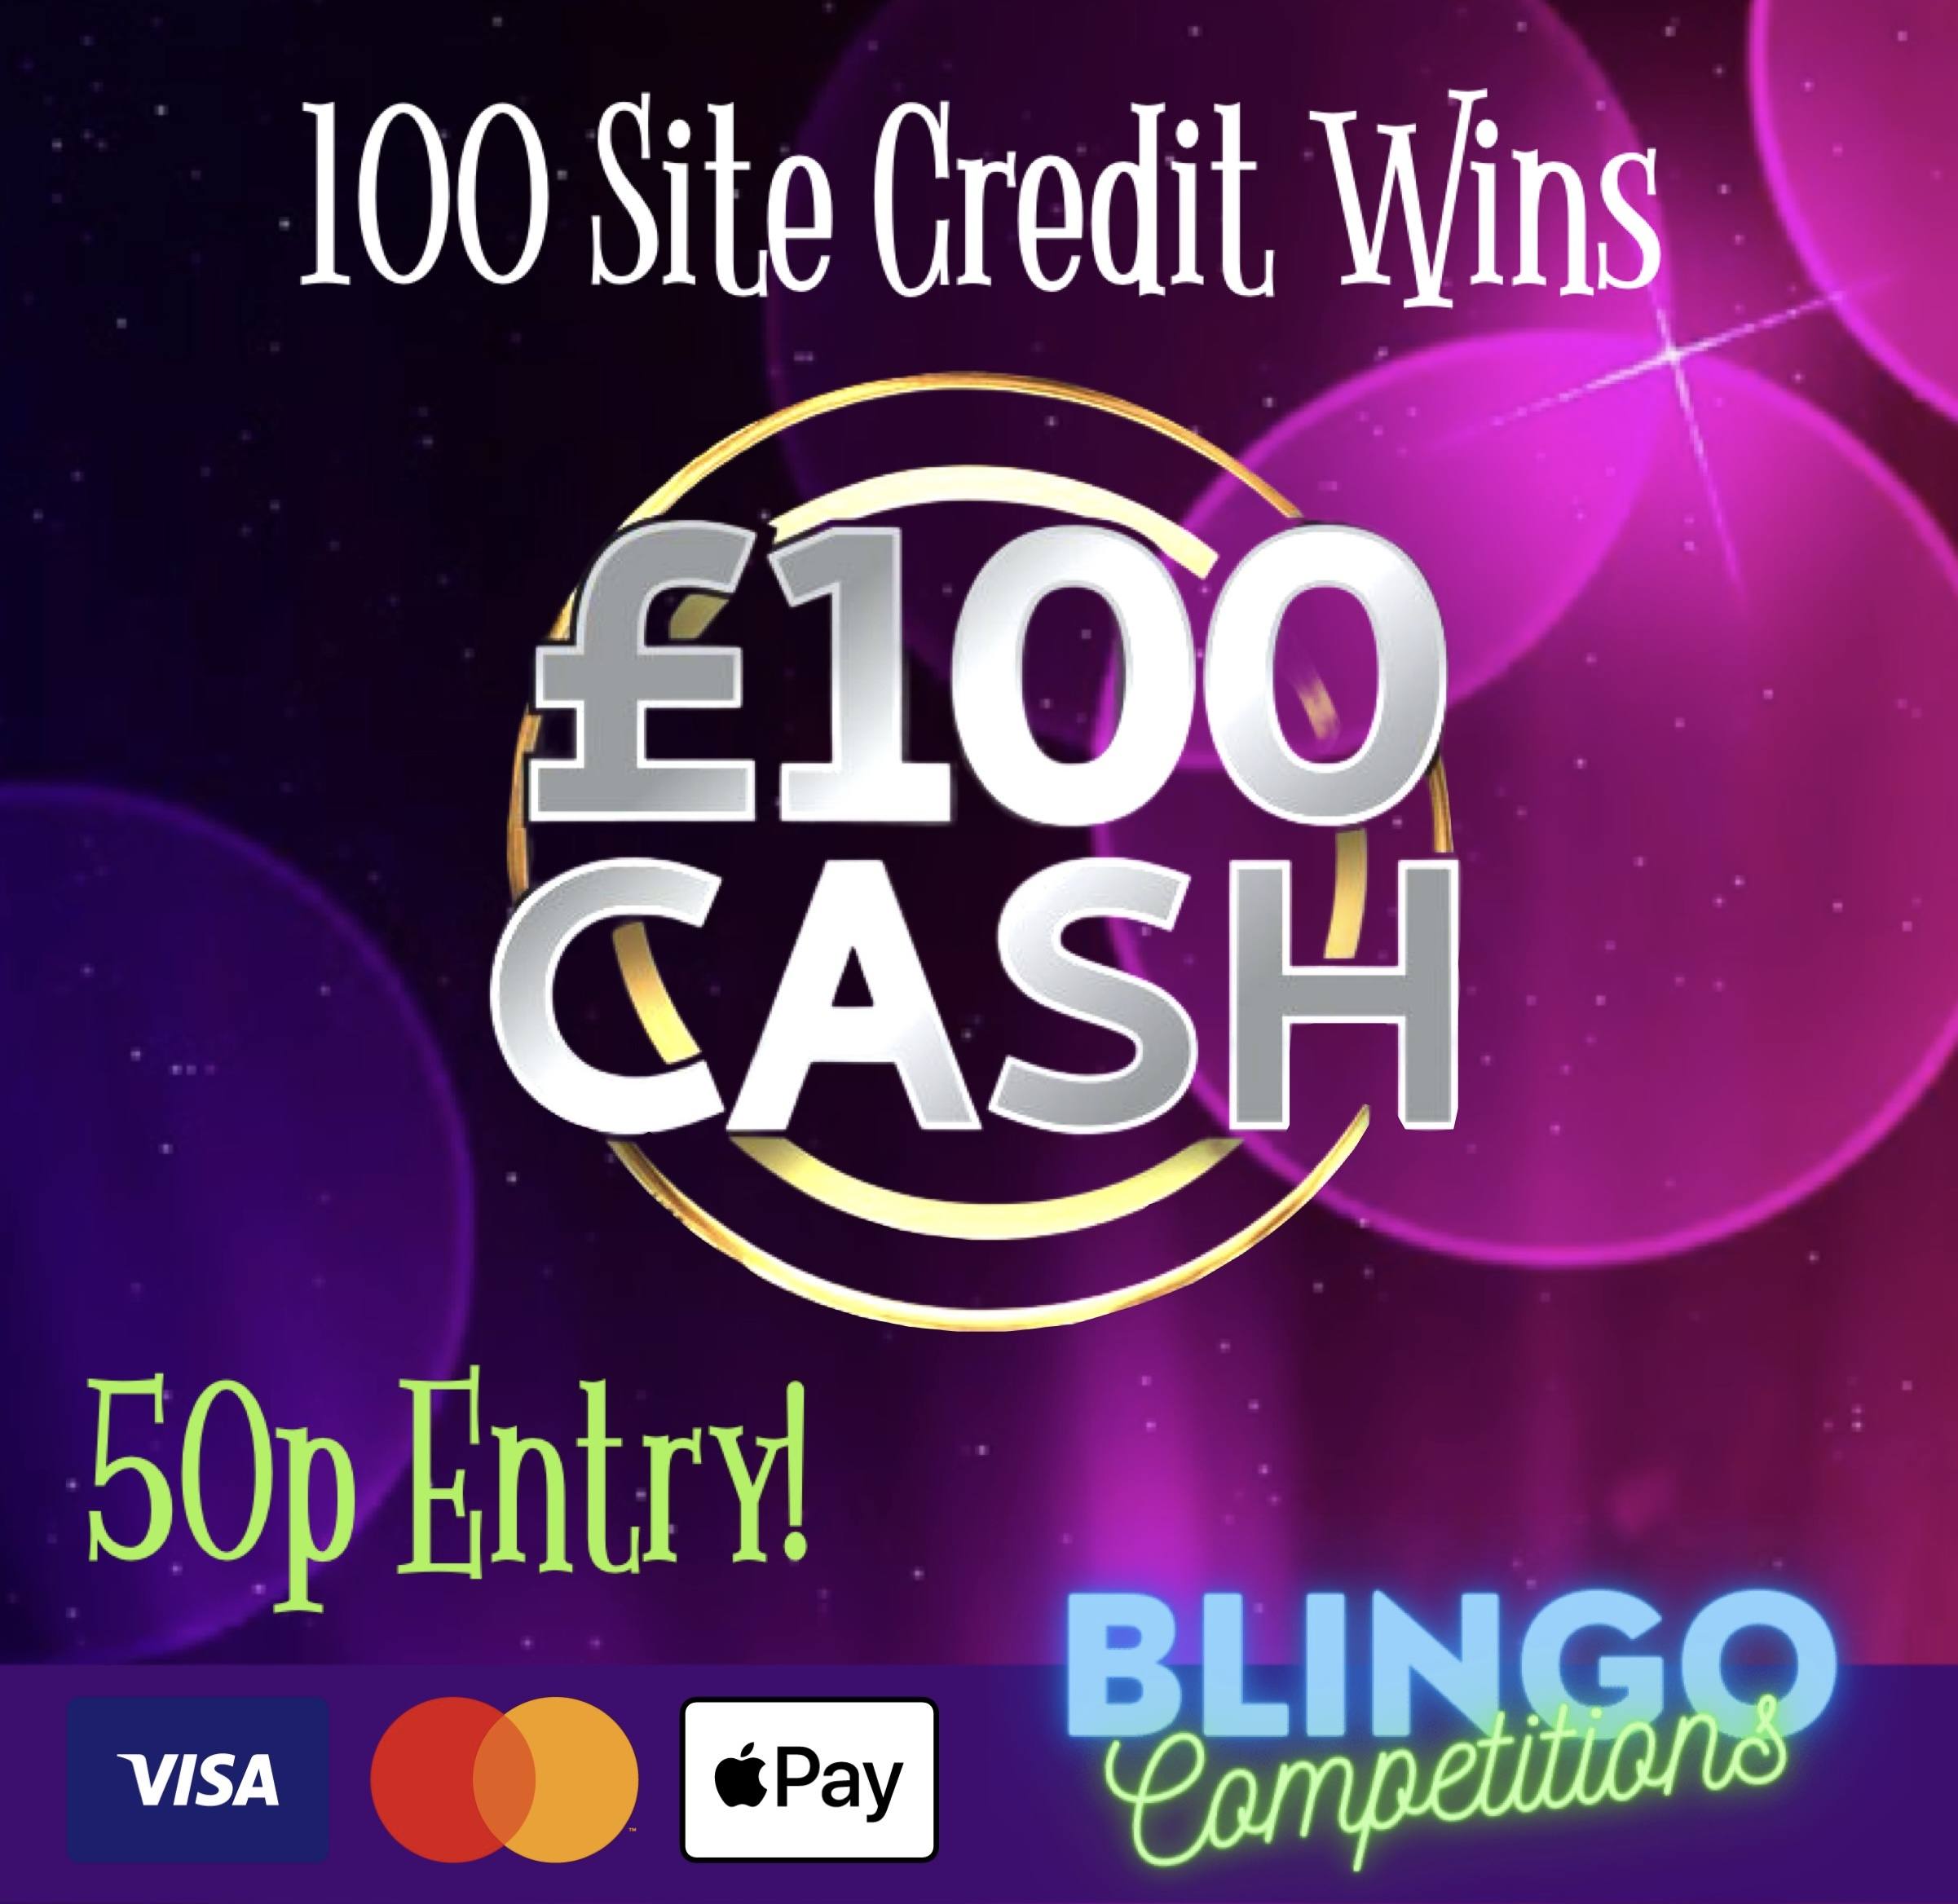 100 Site Credit Wins